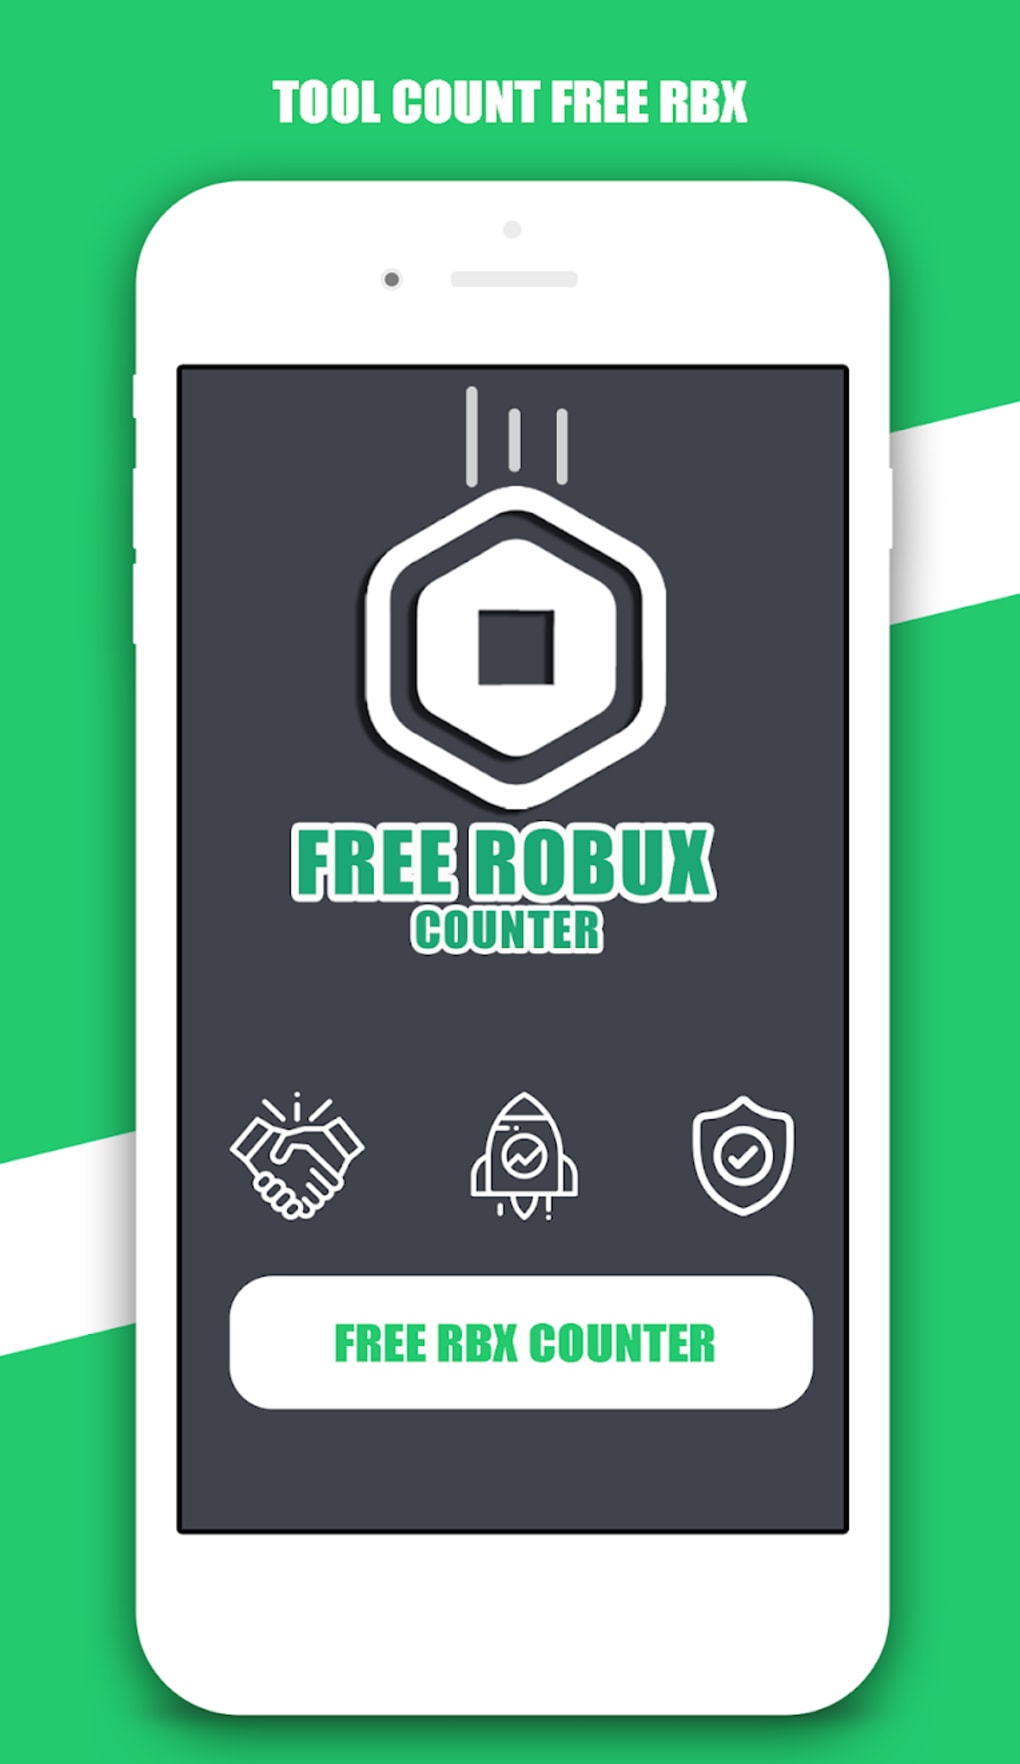 Free Robux - Get Free Robux Codes - Roblox Free Robux Generator 2020 - Free  Robux Codes For Roblox.pdf